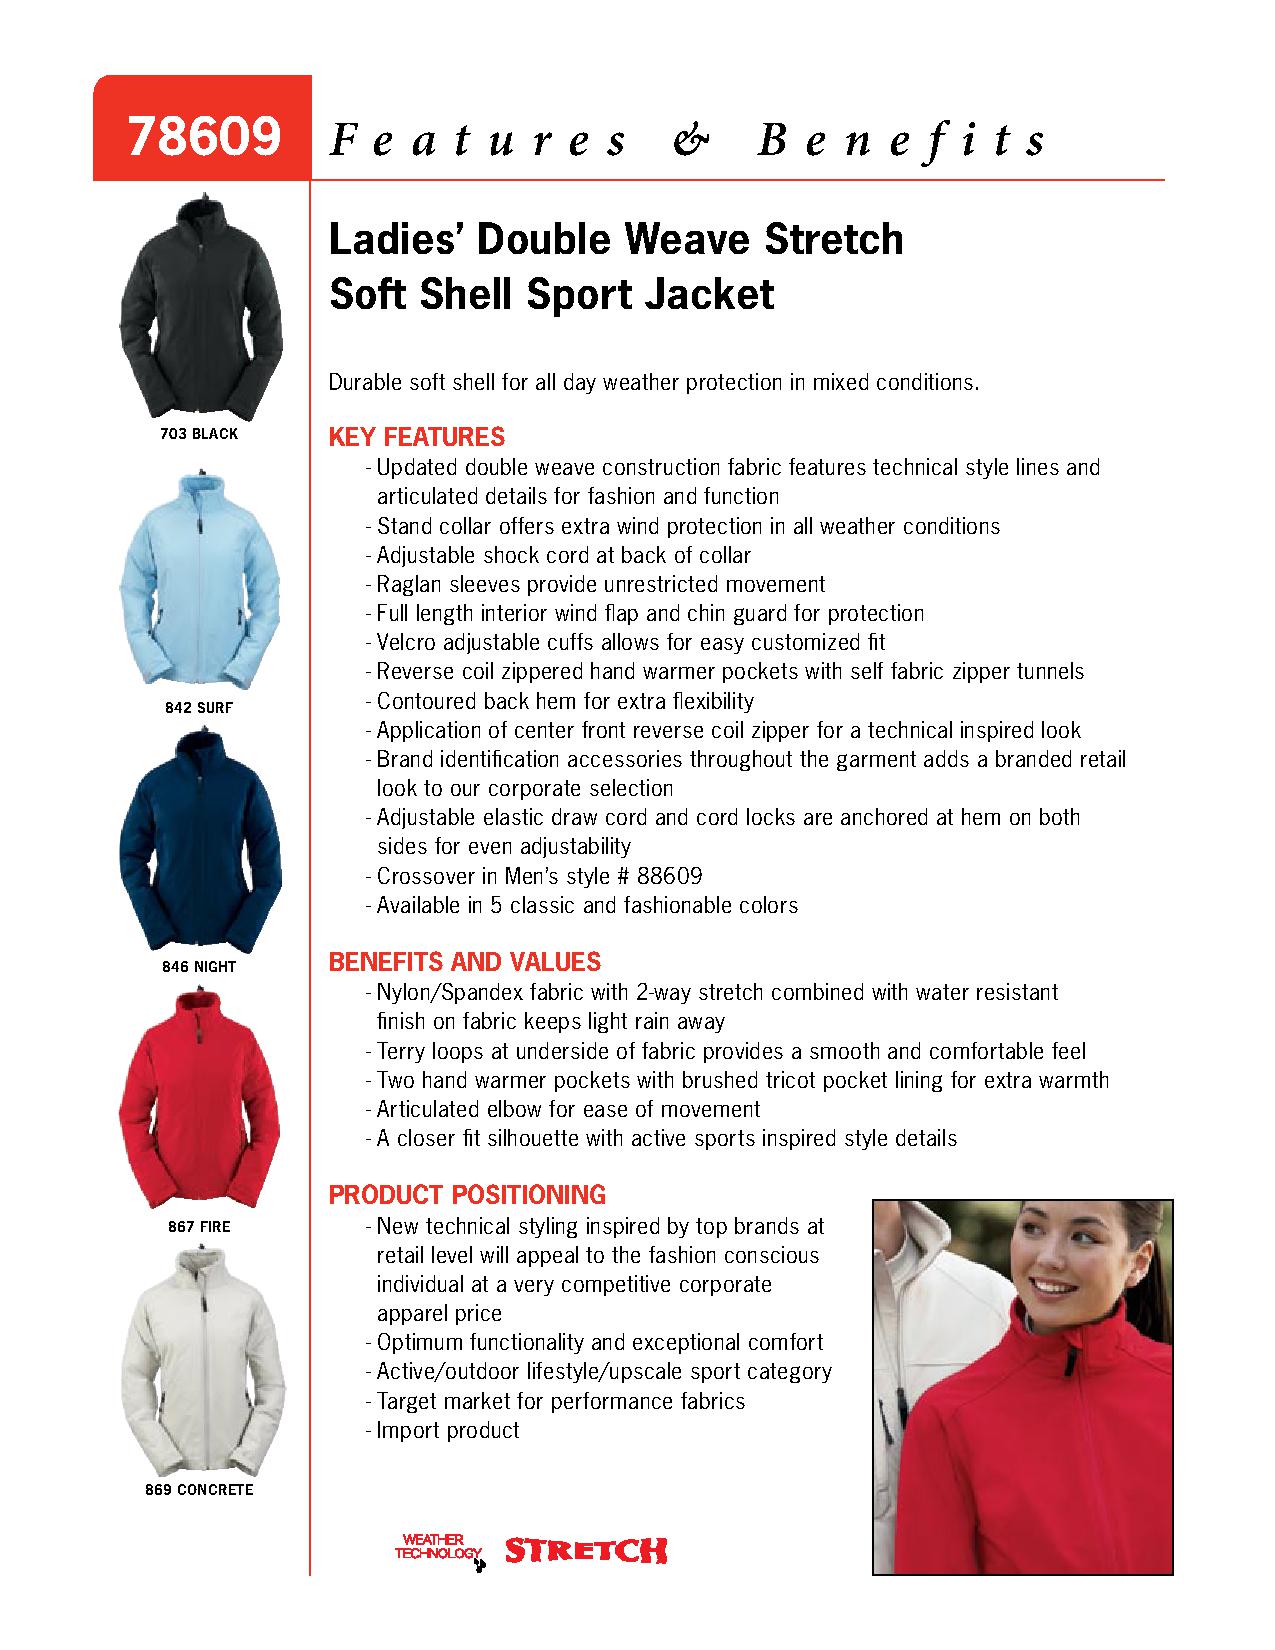 Ash City Soft Shells 78609 - Ladies' Double Weave Stretch Soft Shell Sport Jacket